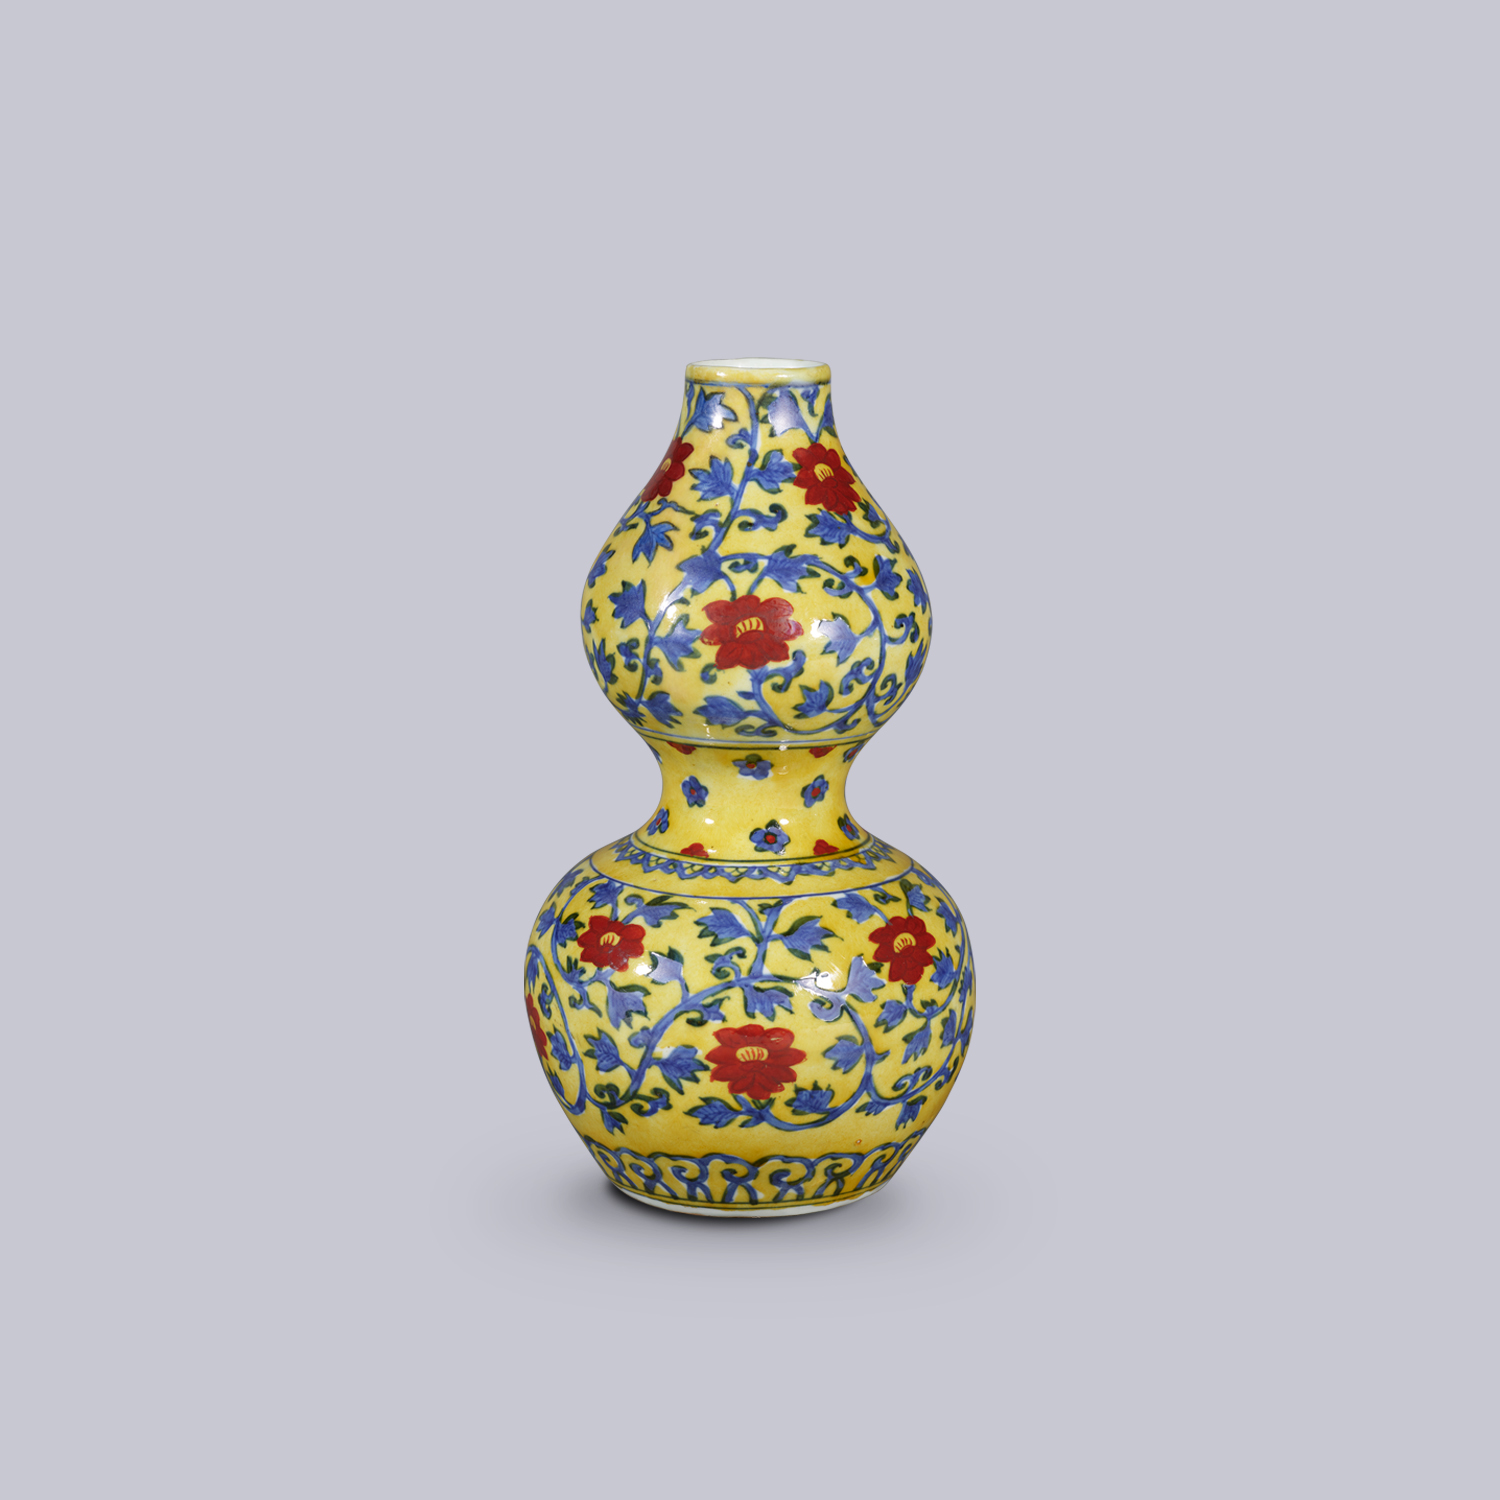 Double-gourd vase with iron-red interlocking floral scrolls design in underglaze blue on yellow ground